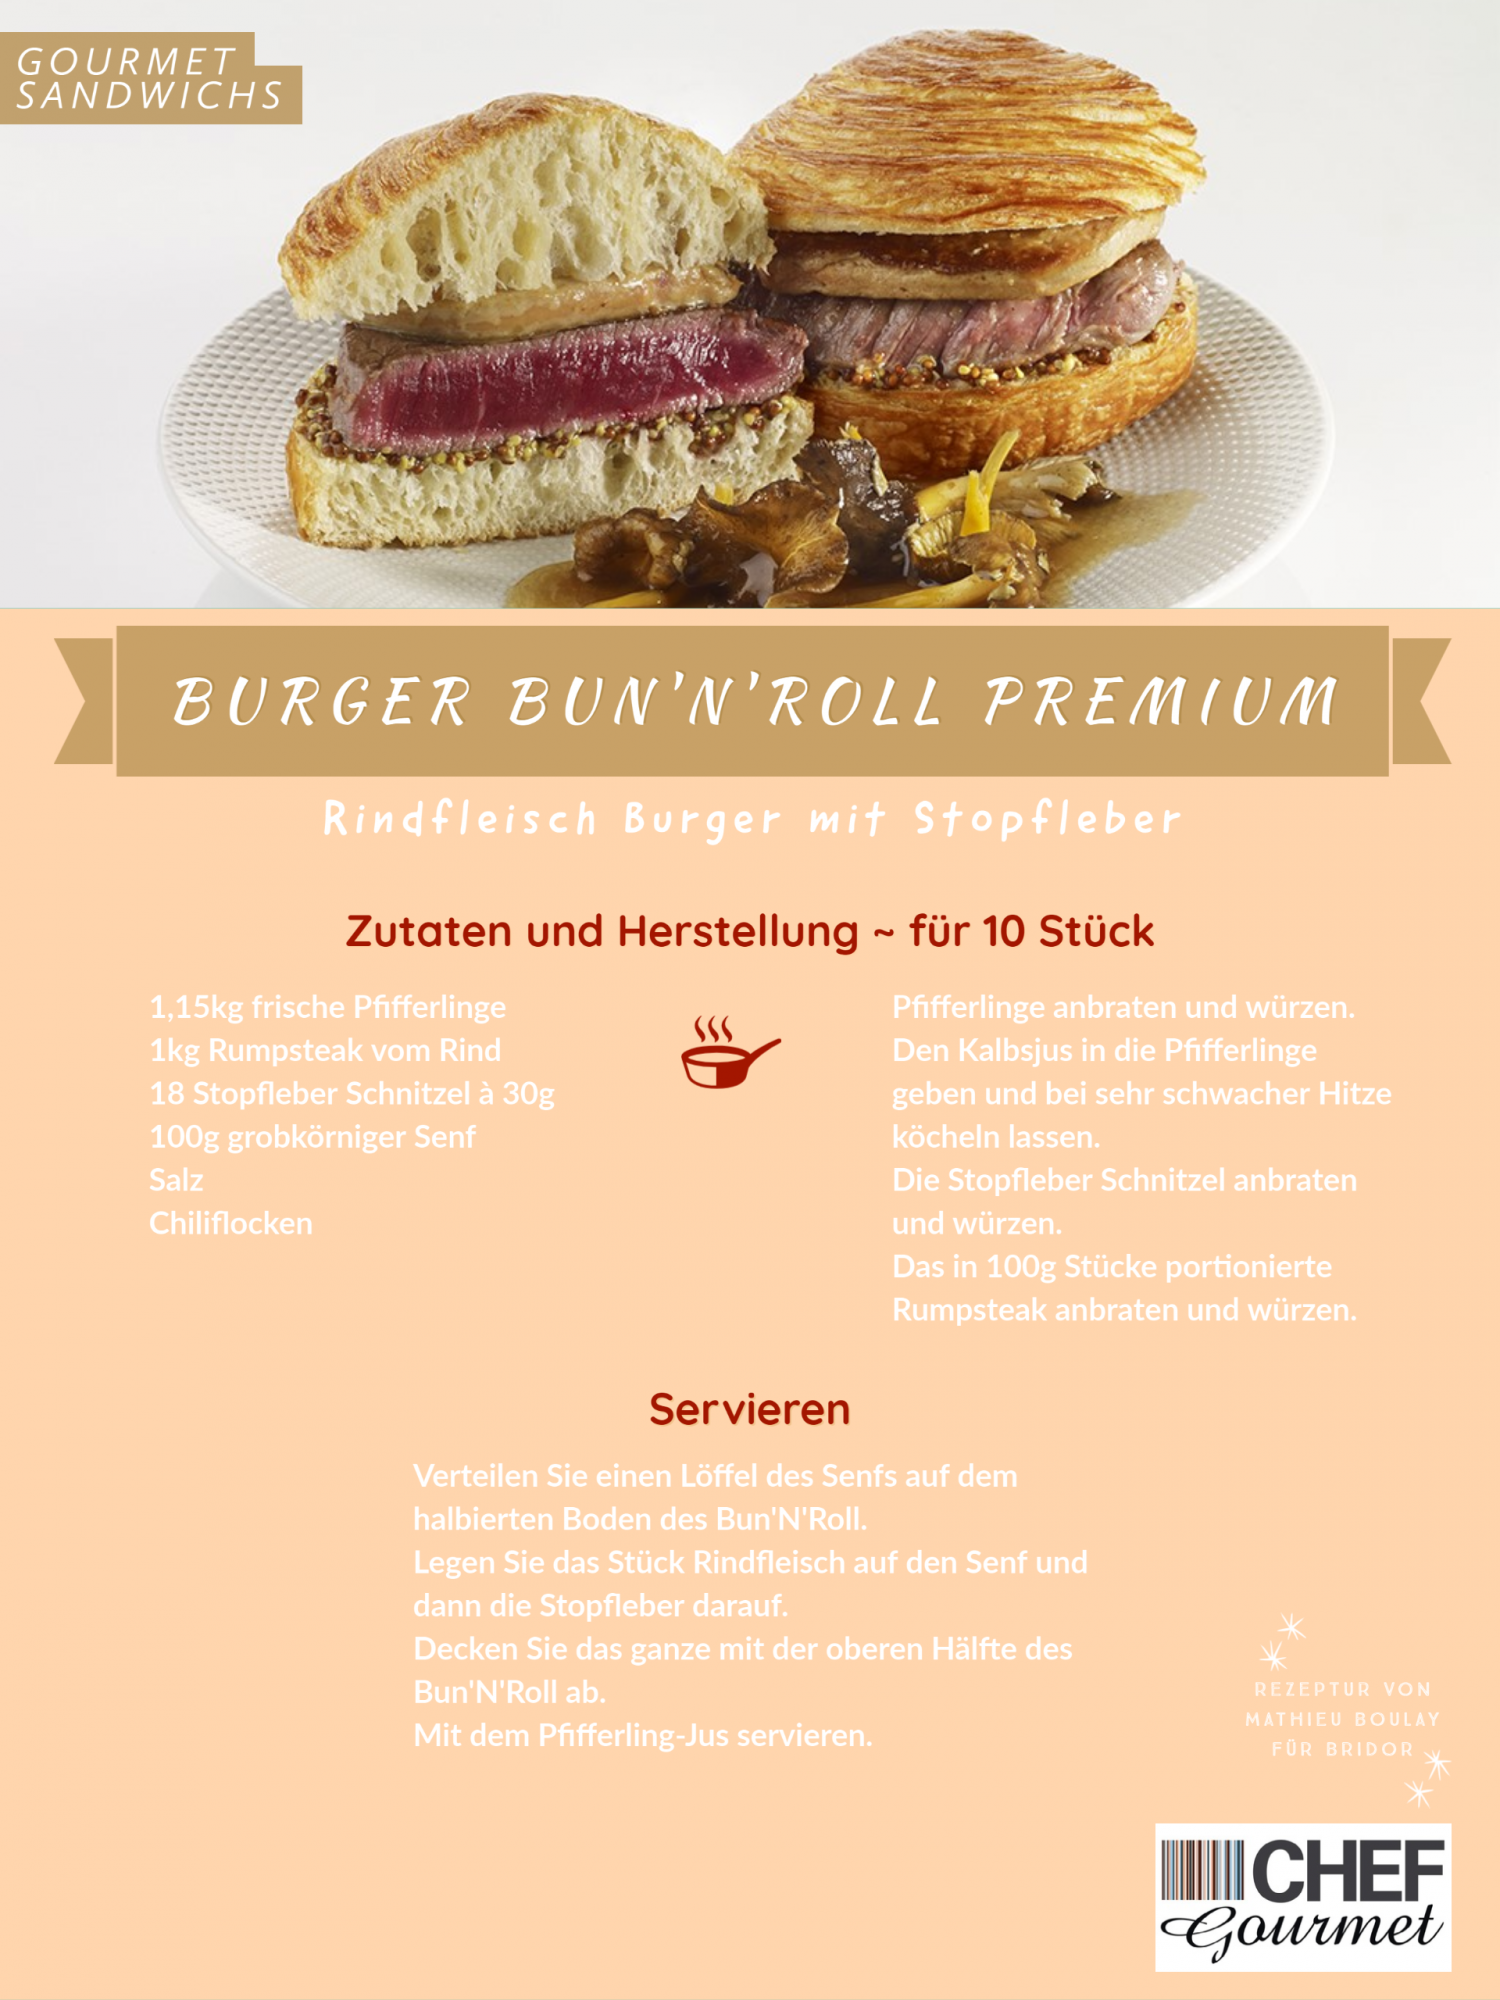 Recette Bun N Roll Burger Premium